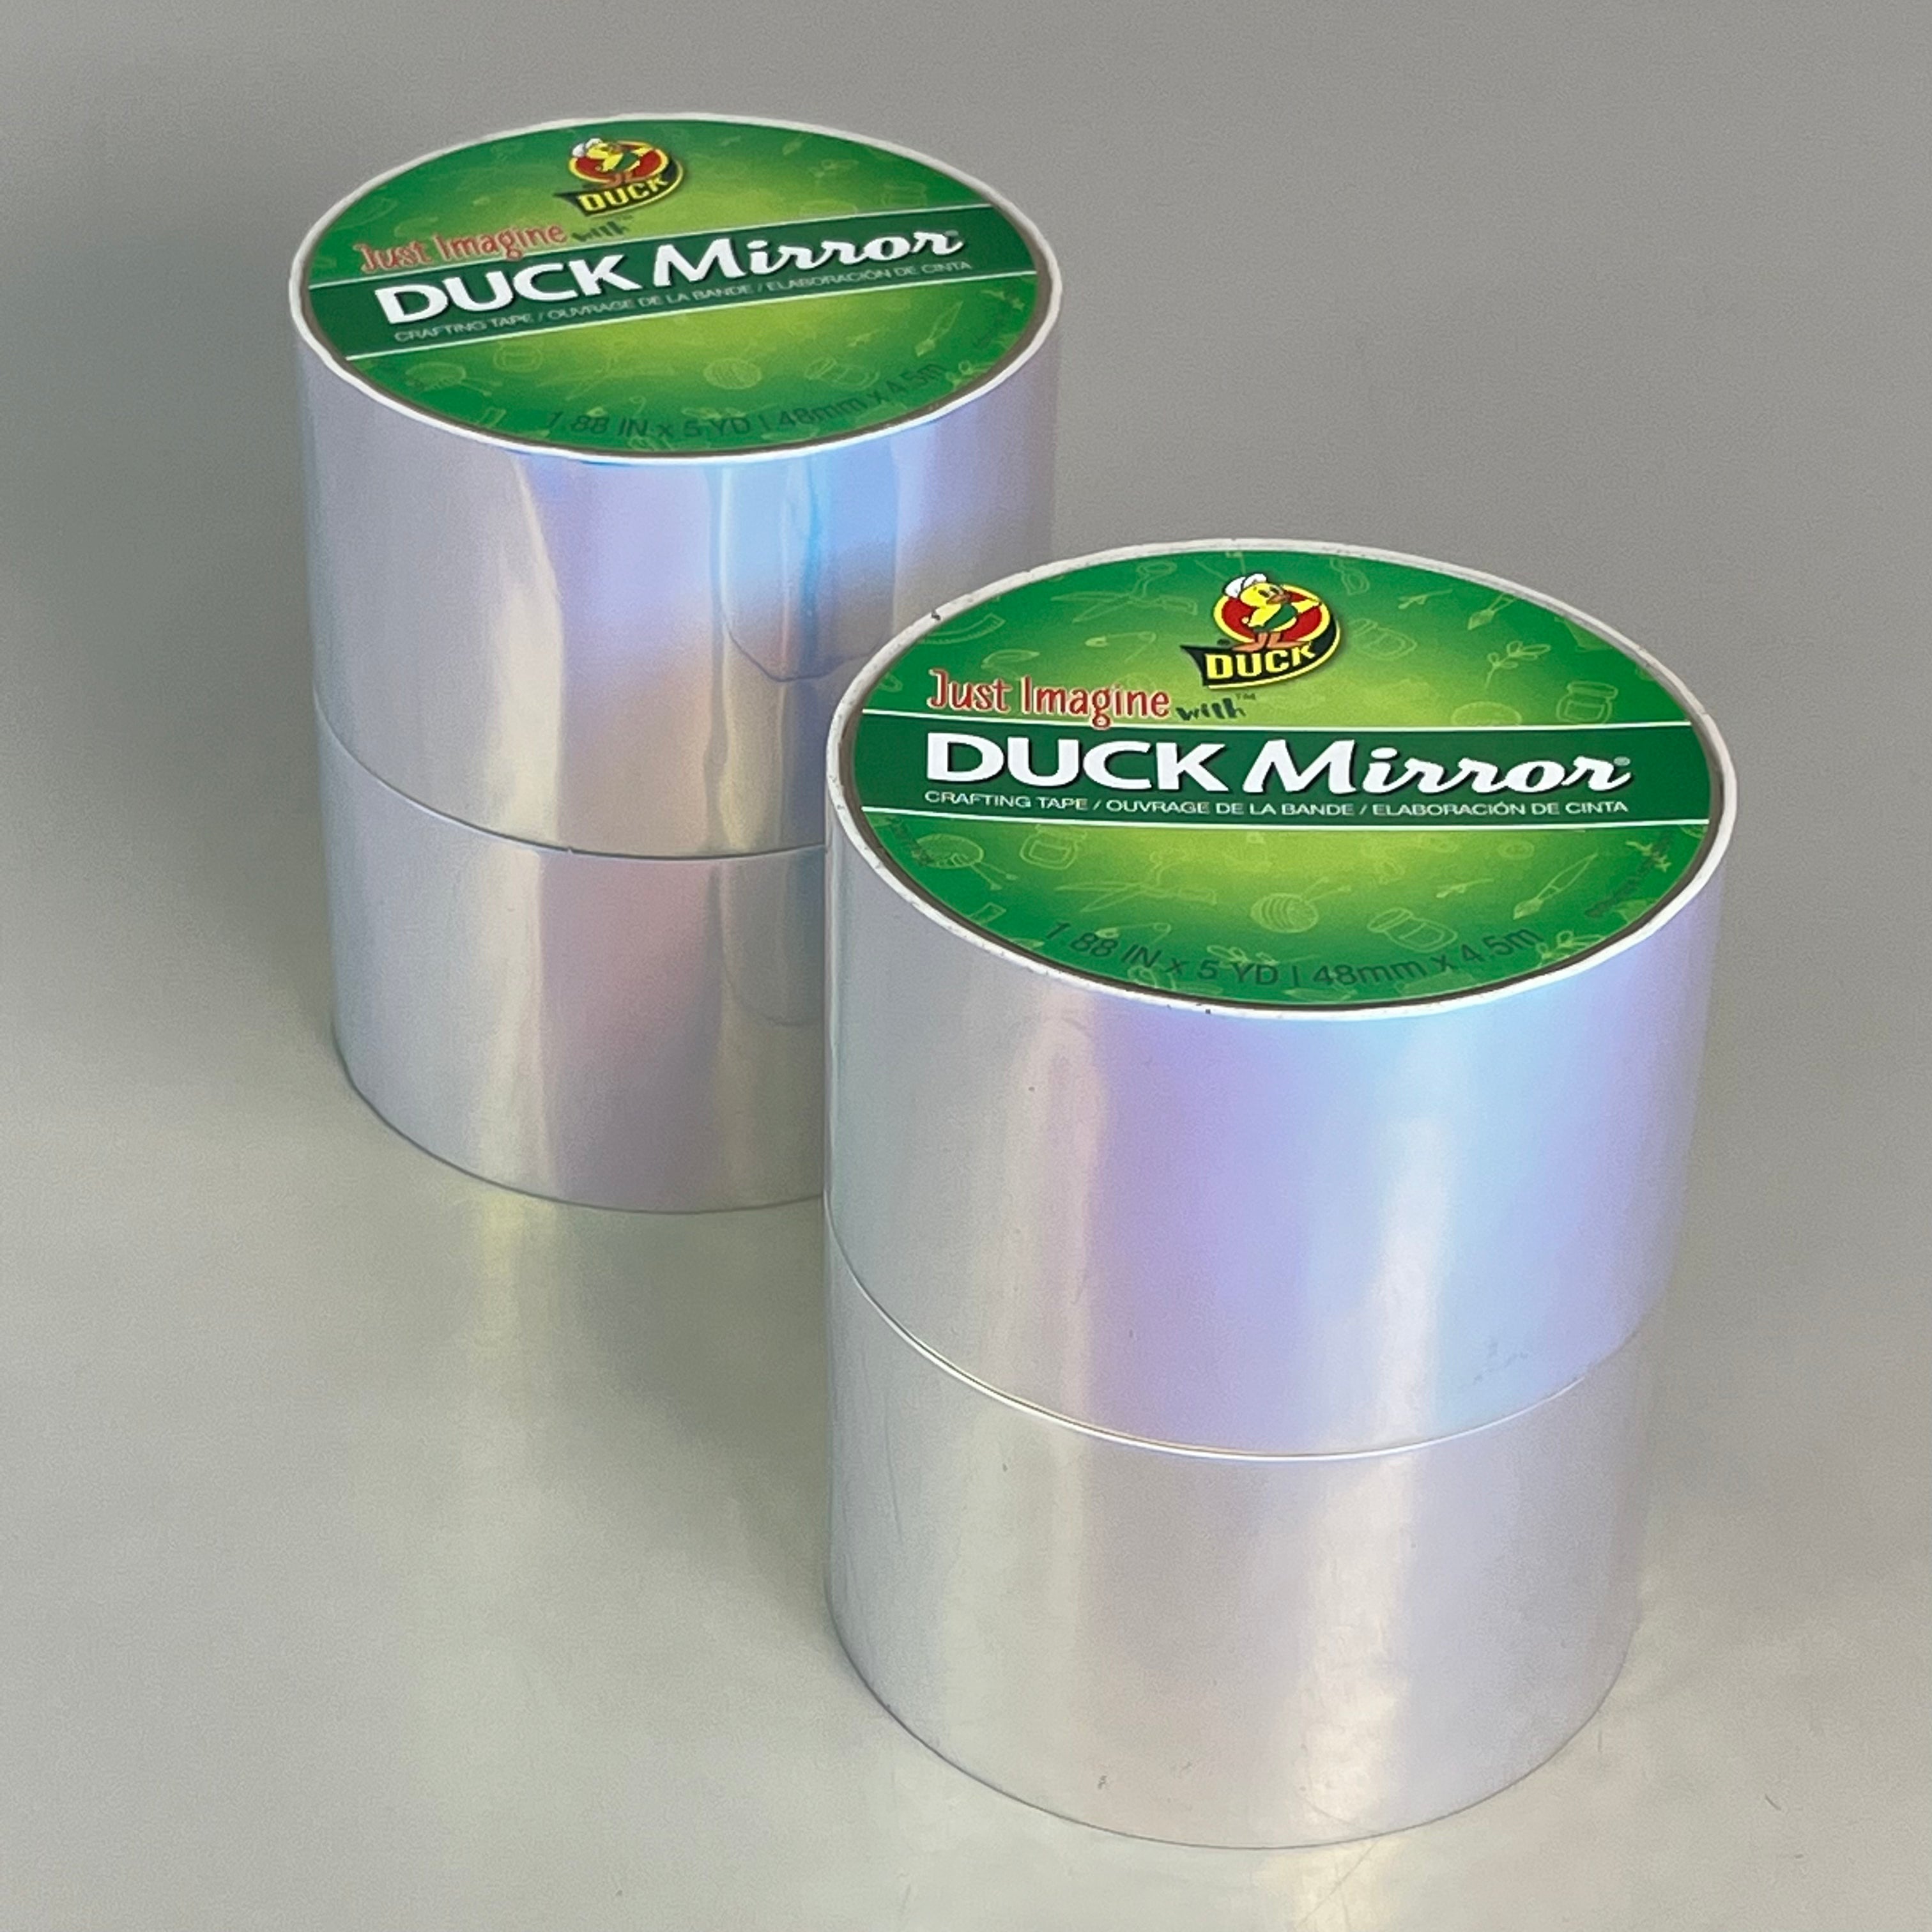 SHURTAPE Duck Craft 4 Rolls of White Mirror Crafting Tape 1.88 X